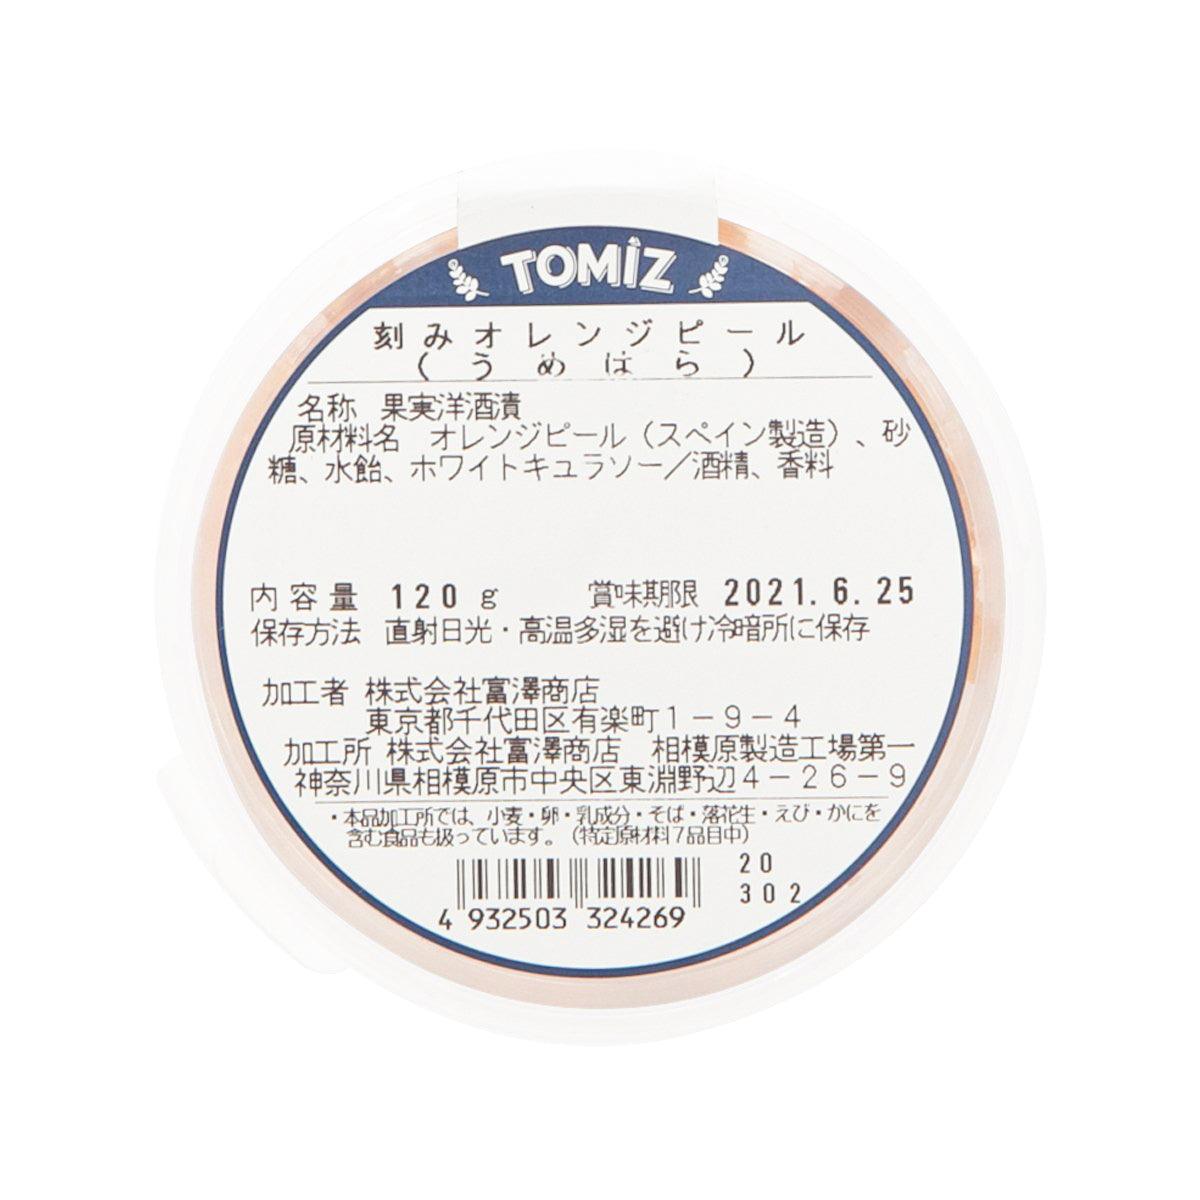 –　TOMIZAWA　E-Shop　Diced　Glazed　Orange　Peel　(120g)　city'super